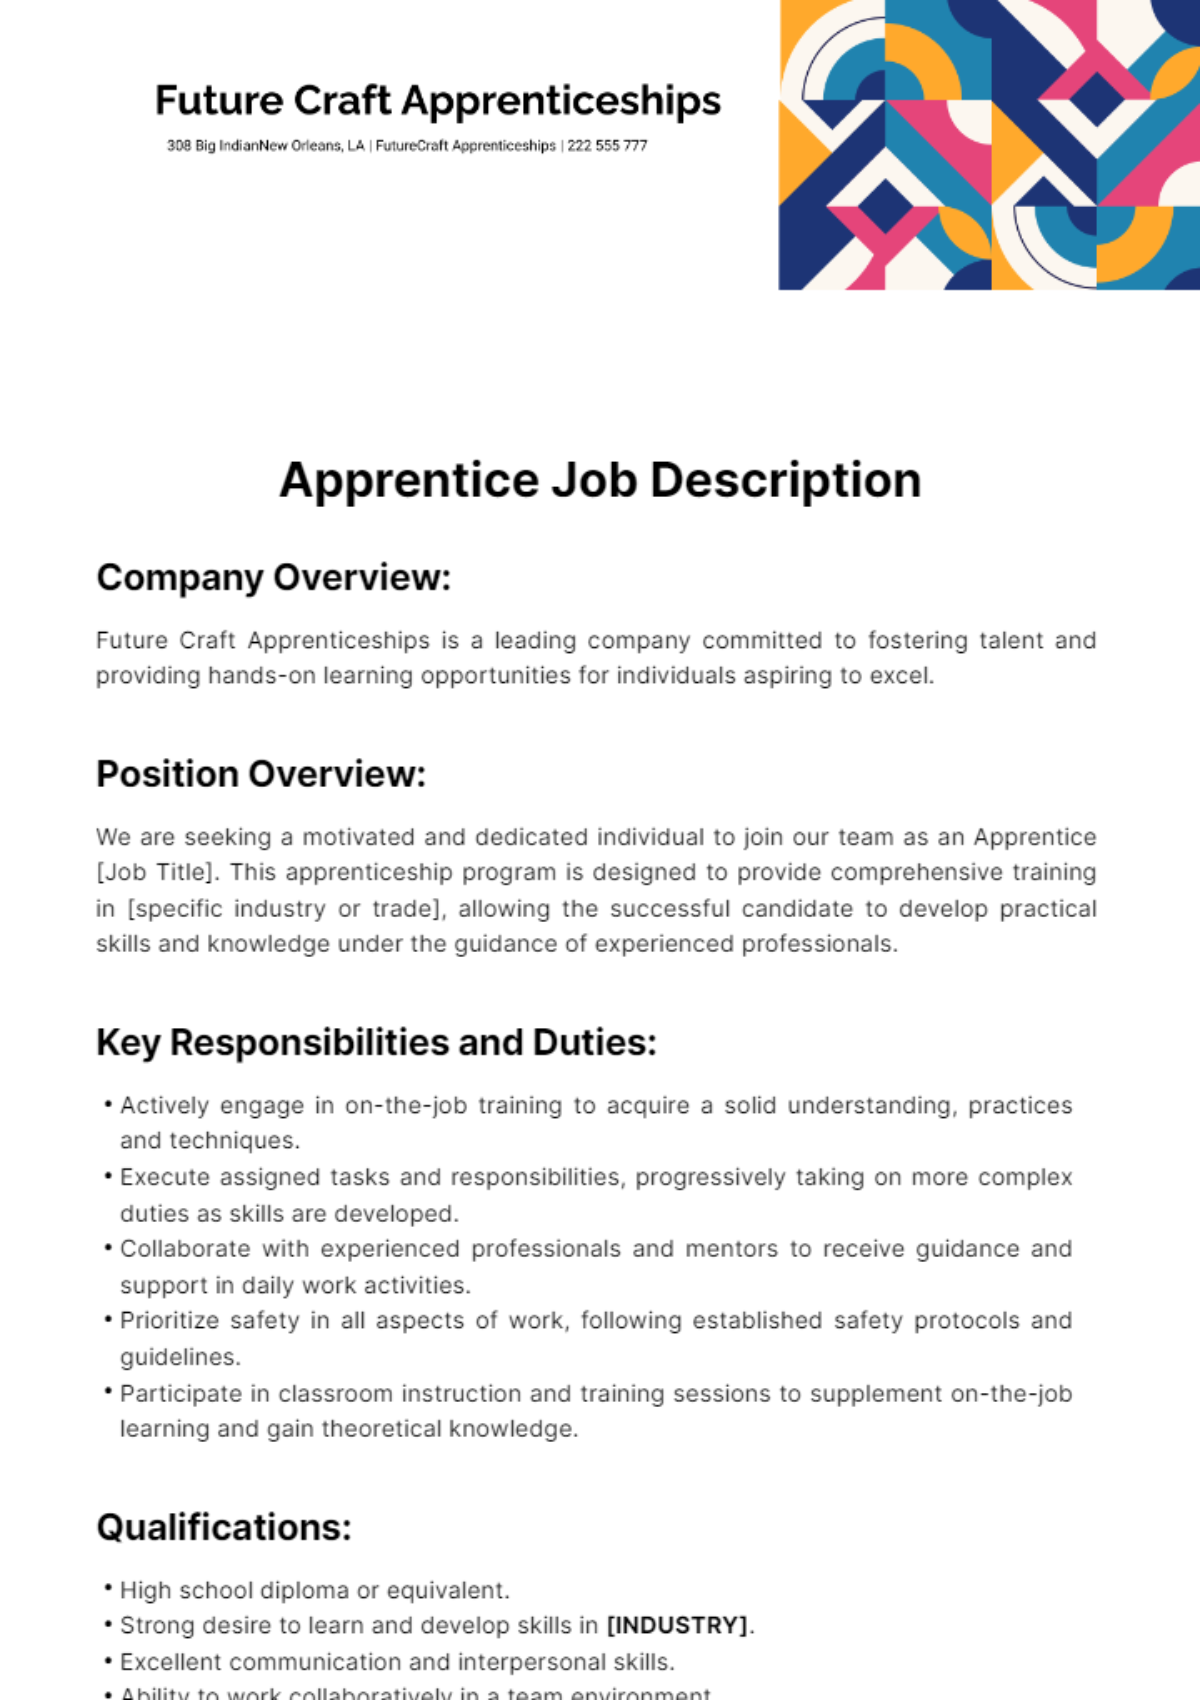 Apprentice Job Description Template